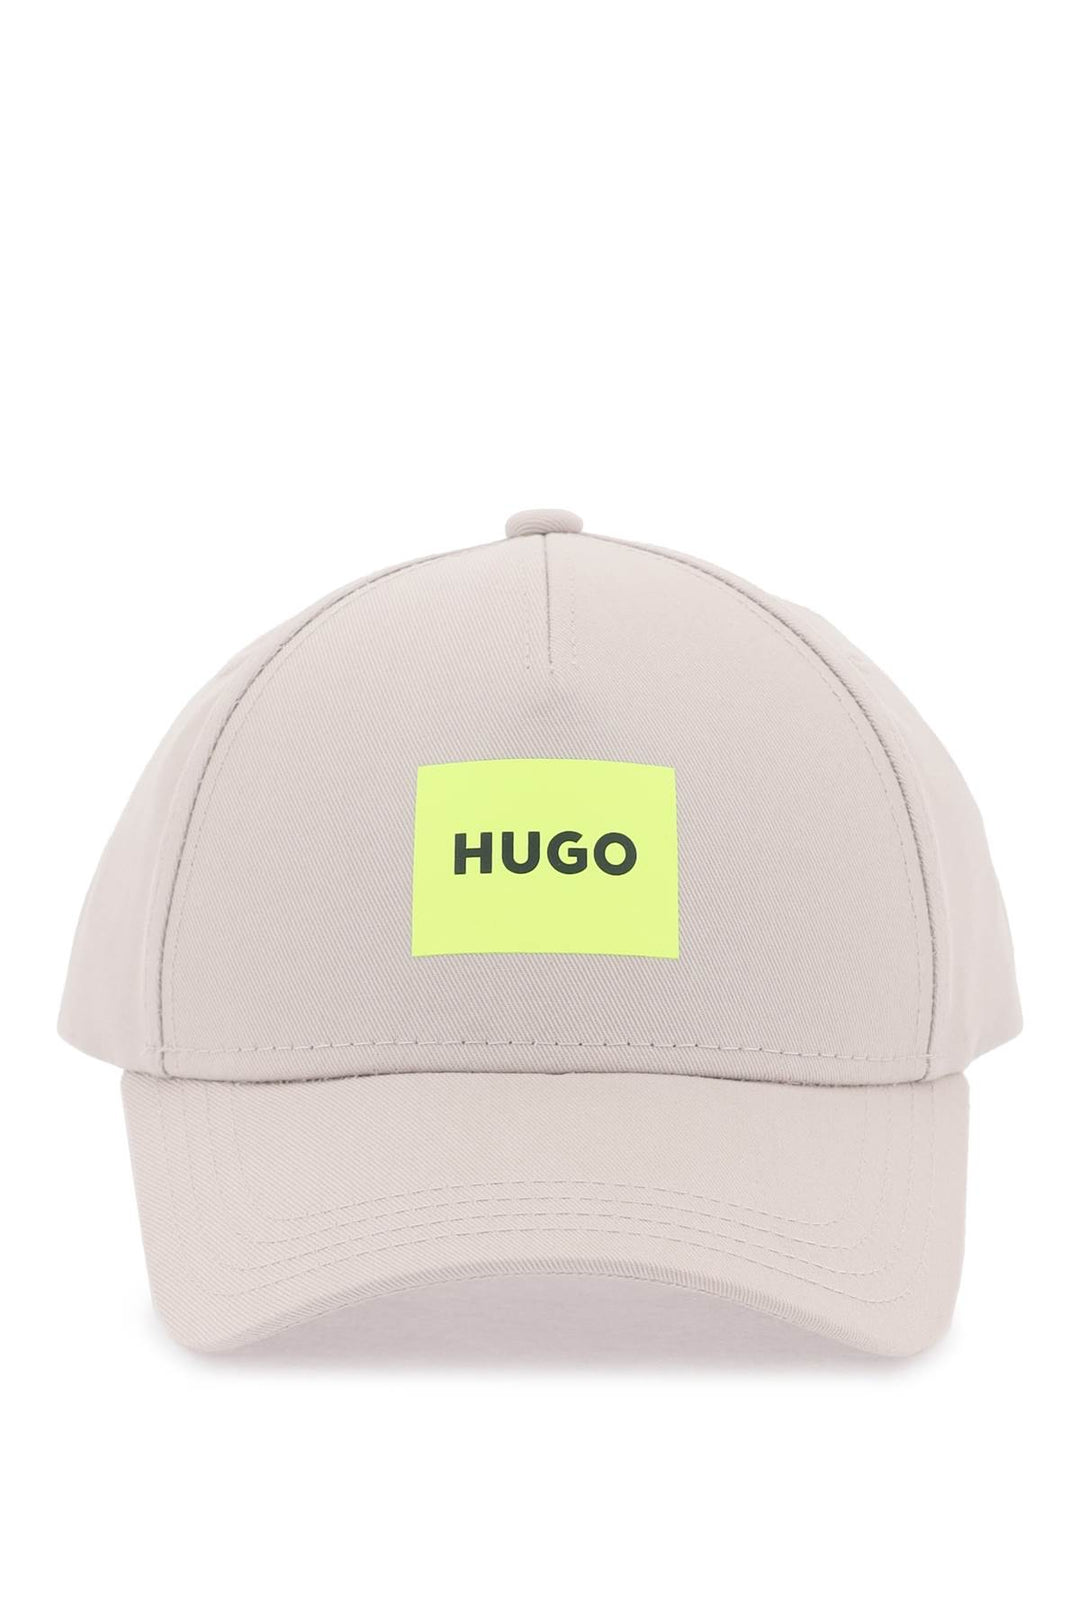 Hugo baseball cap with patch design-0